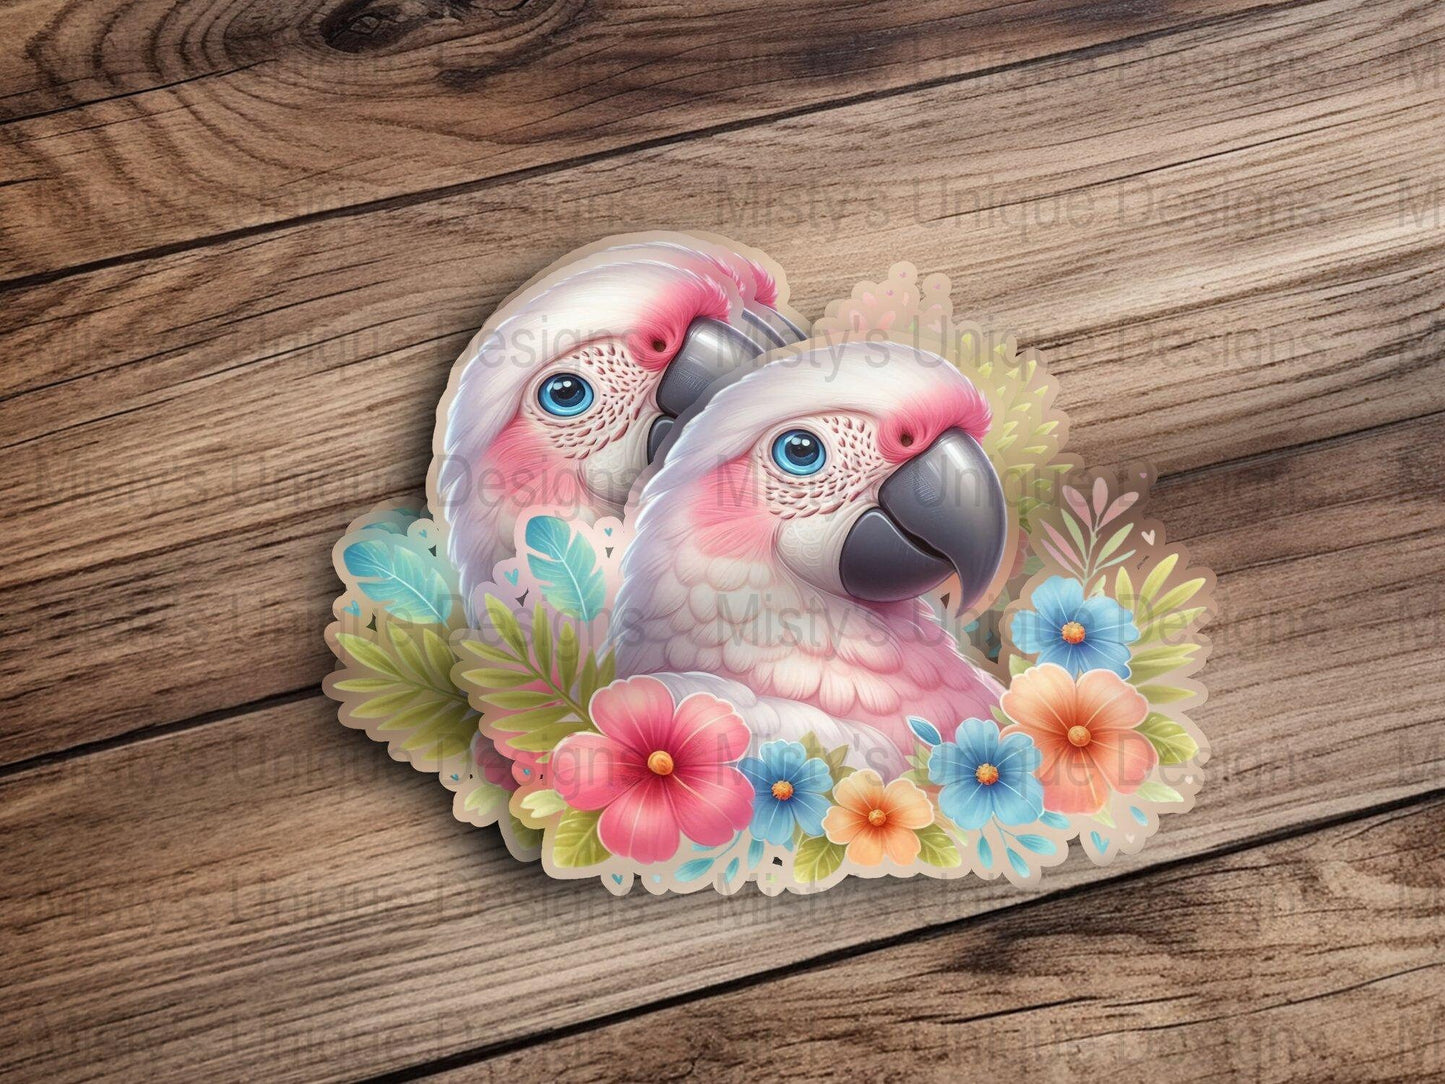 Cockatoo Illustration PNG, Digital Download Clipart, Floral Bird Artwork, Exotic Parrot Graphic, Printable Wall Decor, Scrapbooking Image